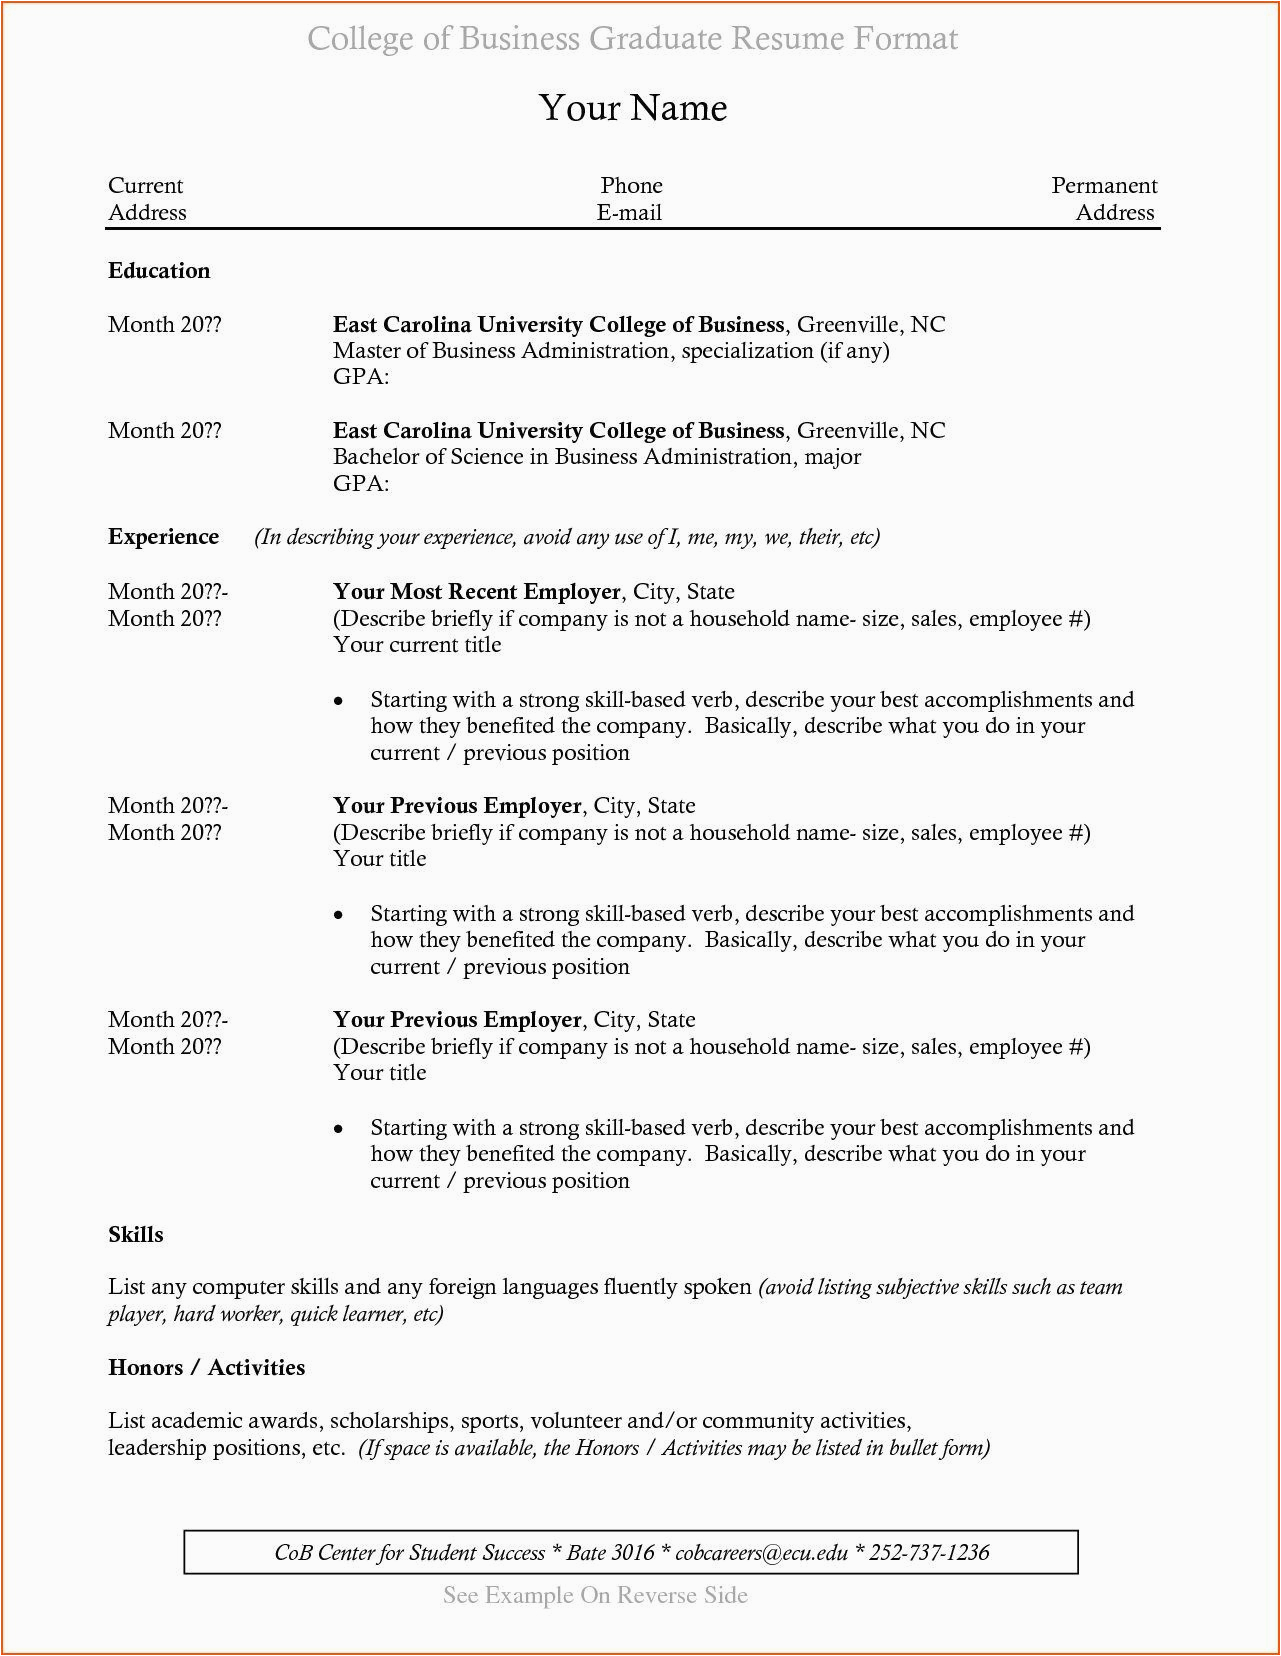 Resume Sample for New College Student Resume Templates Recent College Graduate Resumetemplates